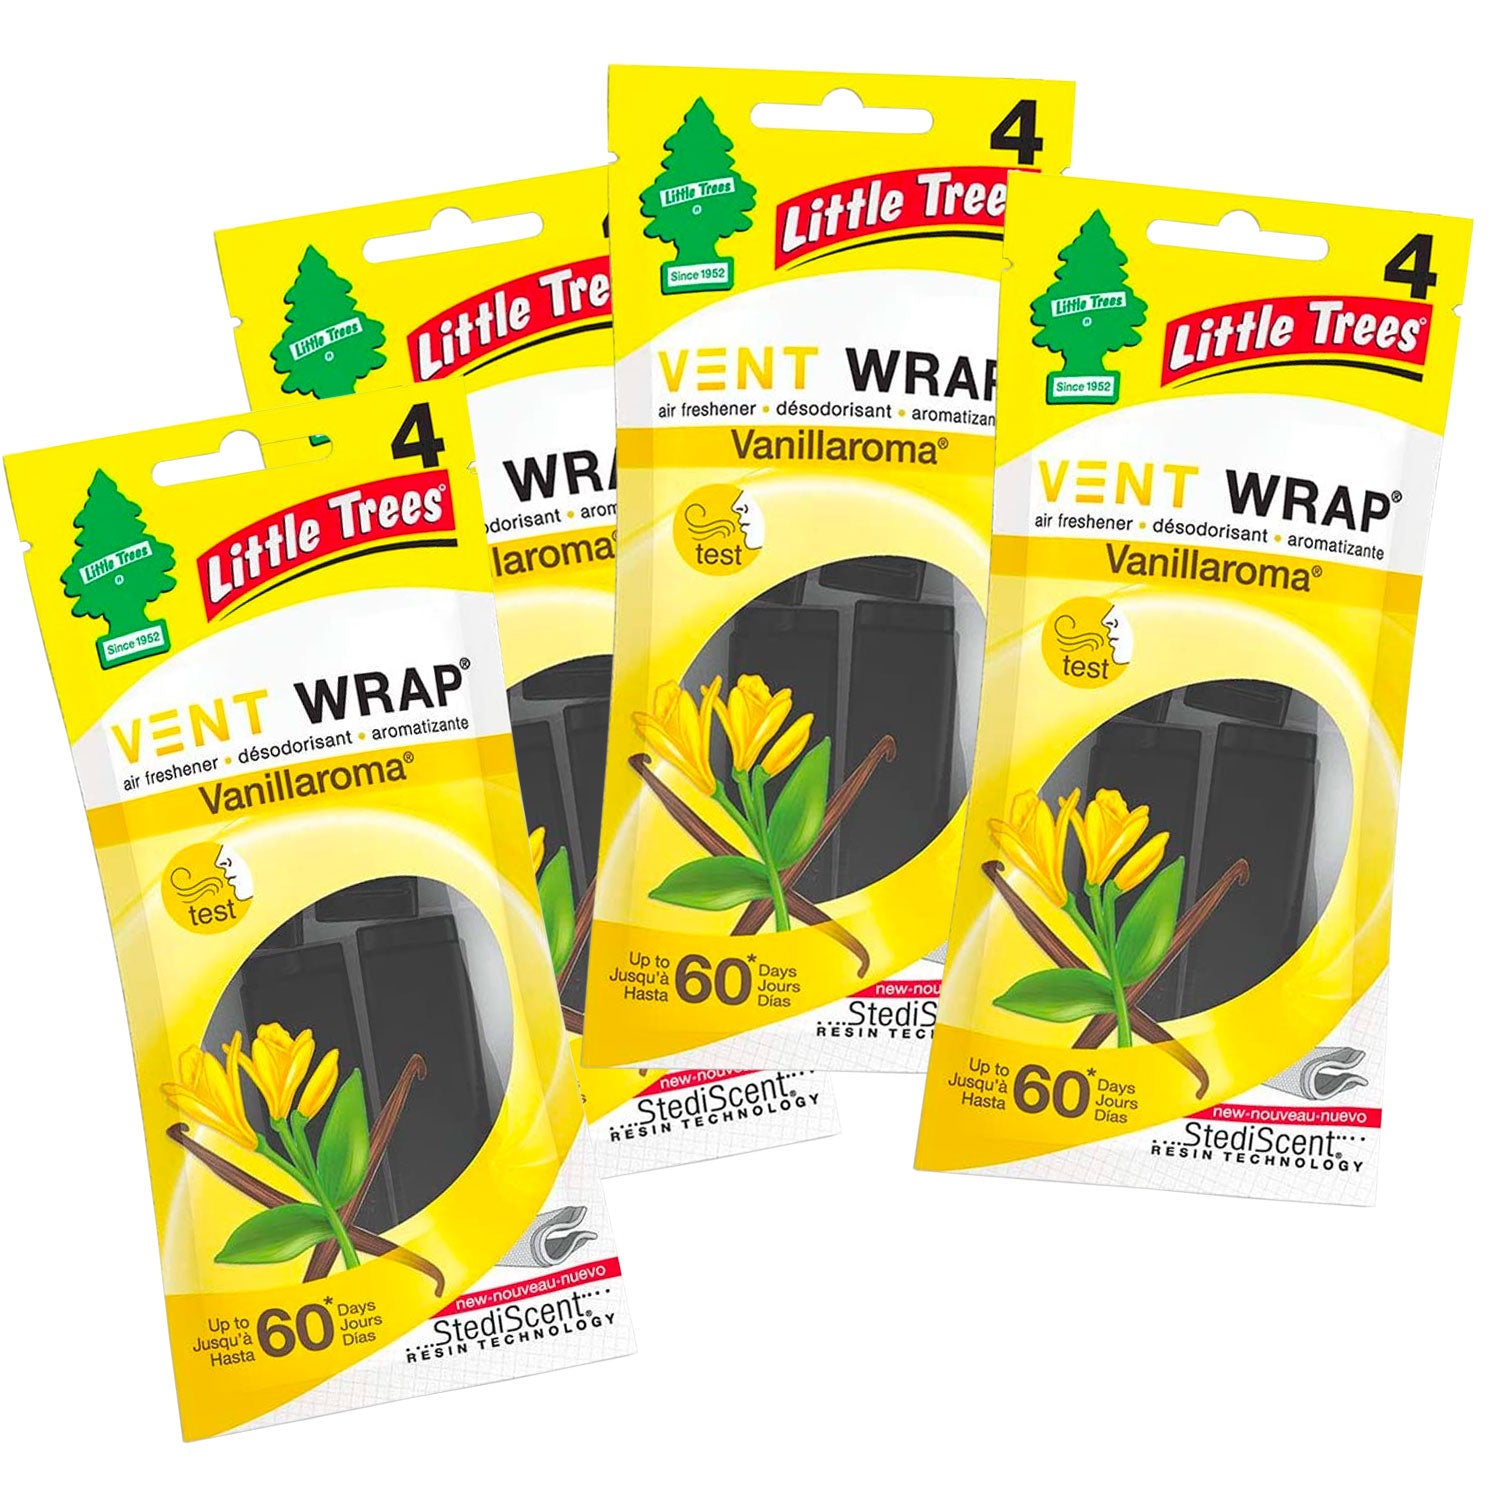 Little Trees Vent Wrap Air Freshener 4-PACKS (Vanillaroma) by GOSO Direct